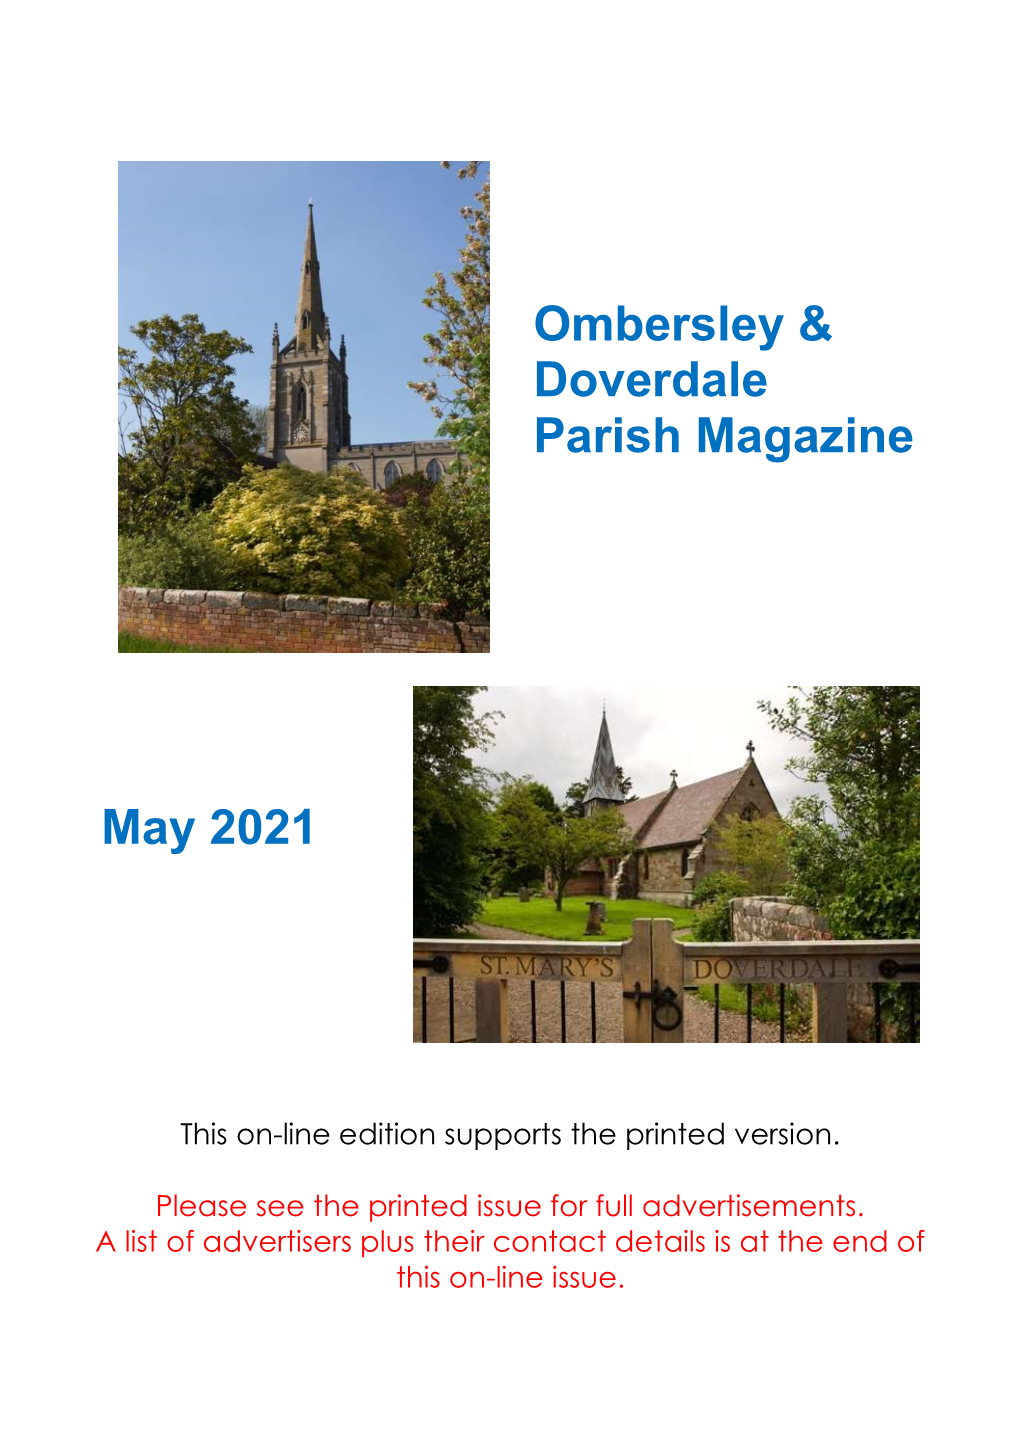 Ombersley & Doverdale Parish Magazine May 2021